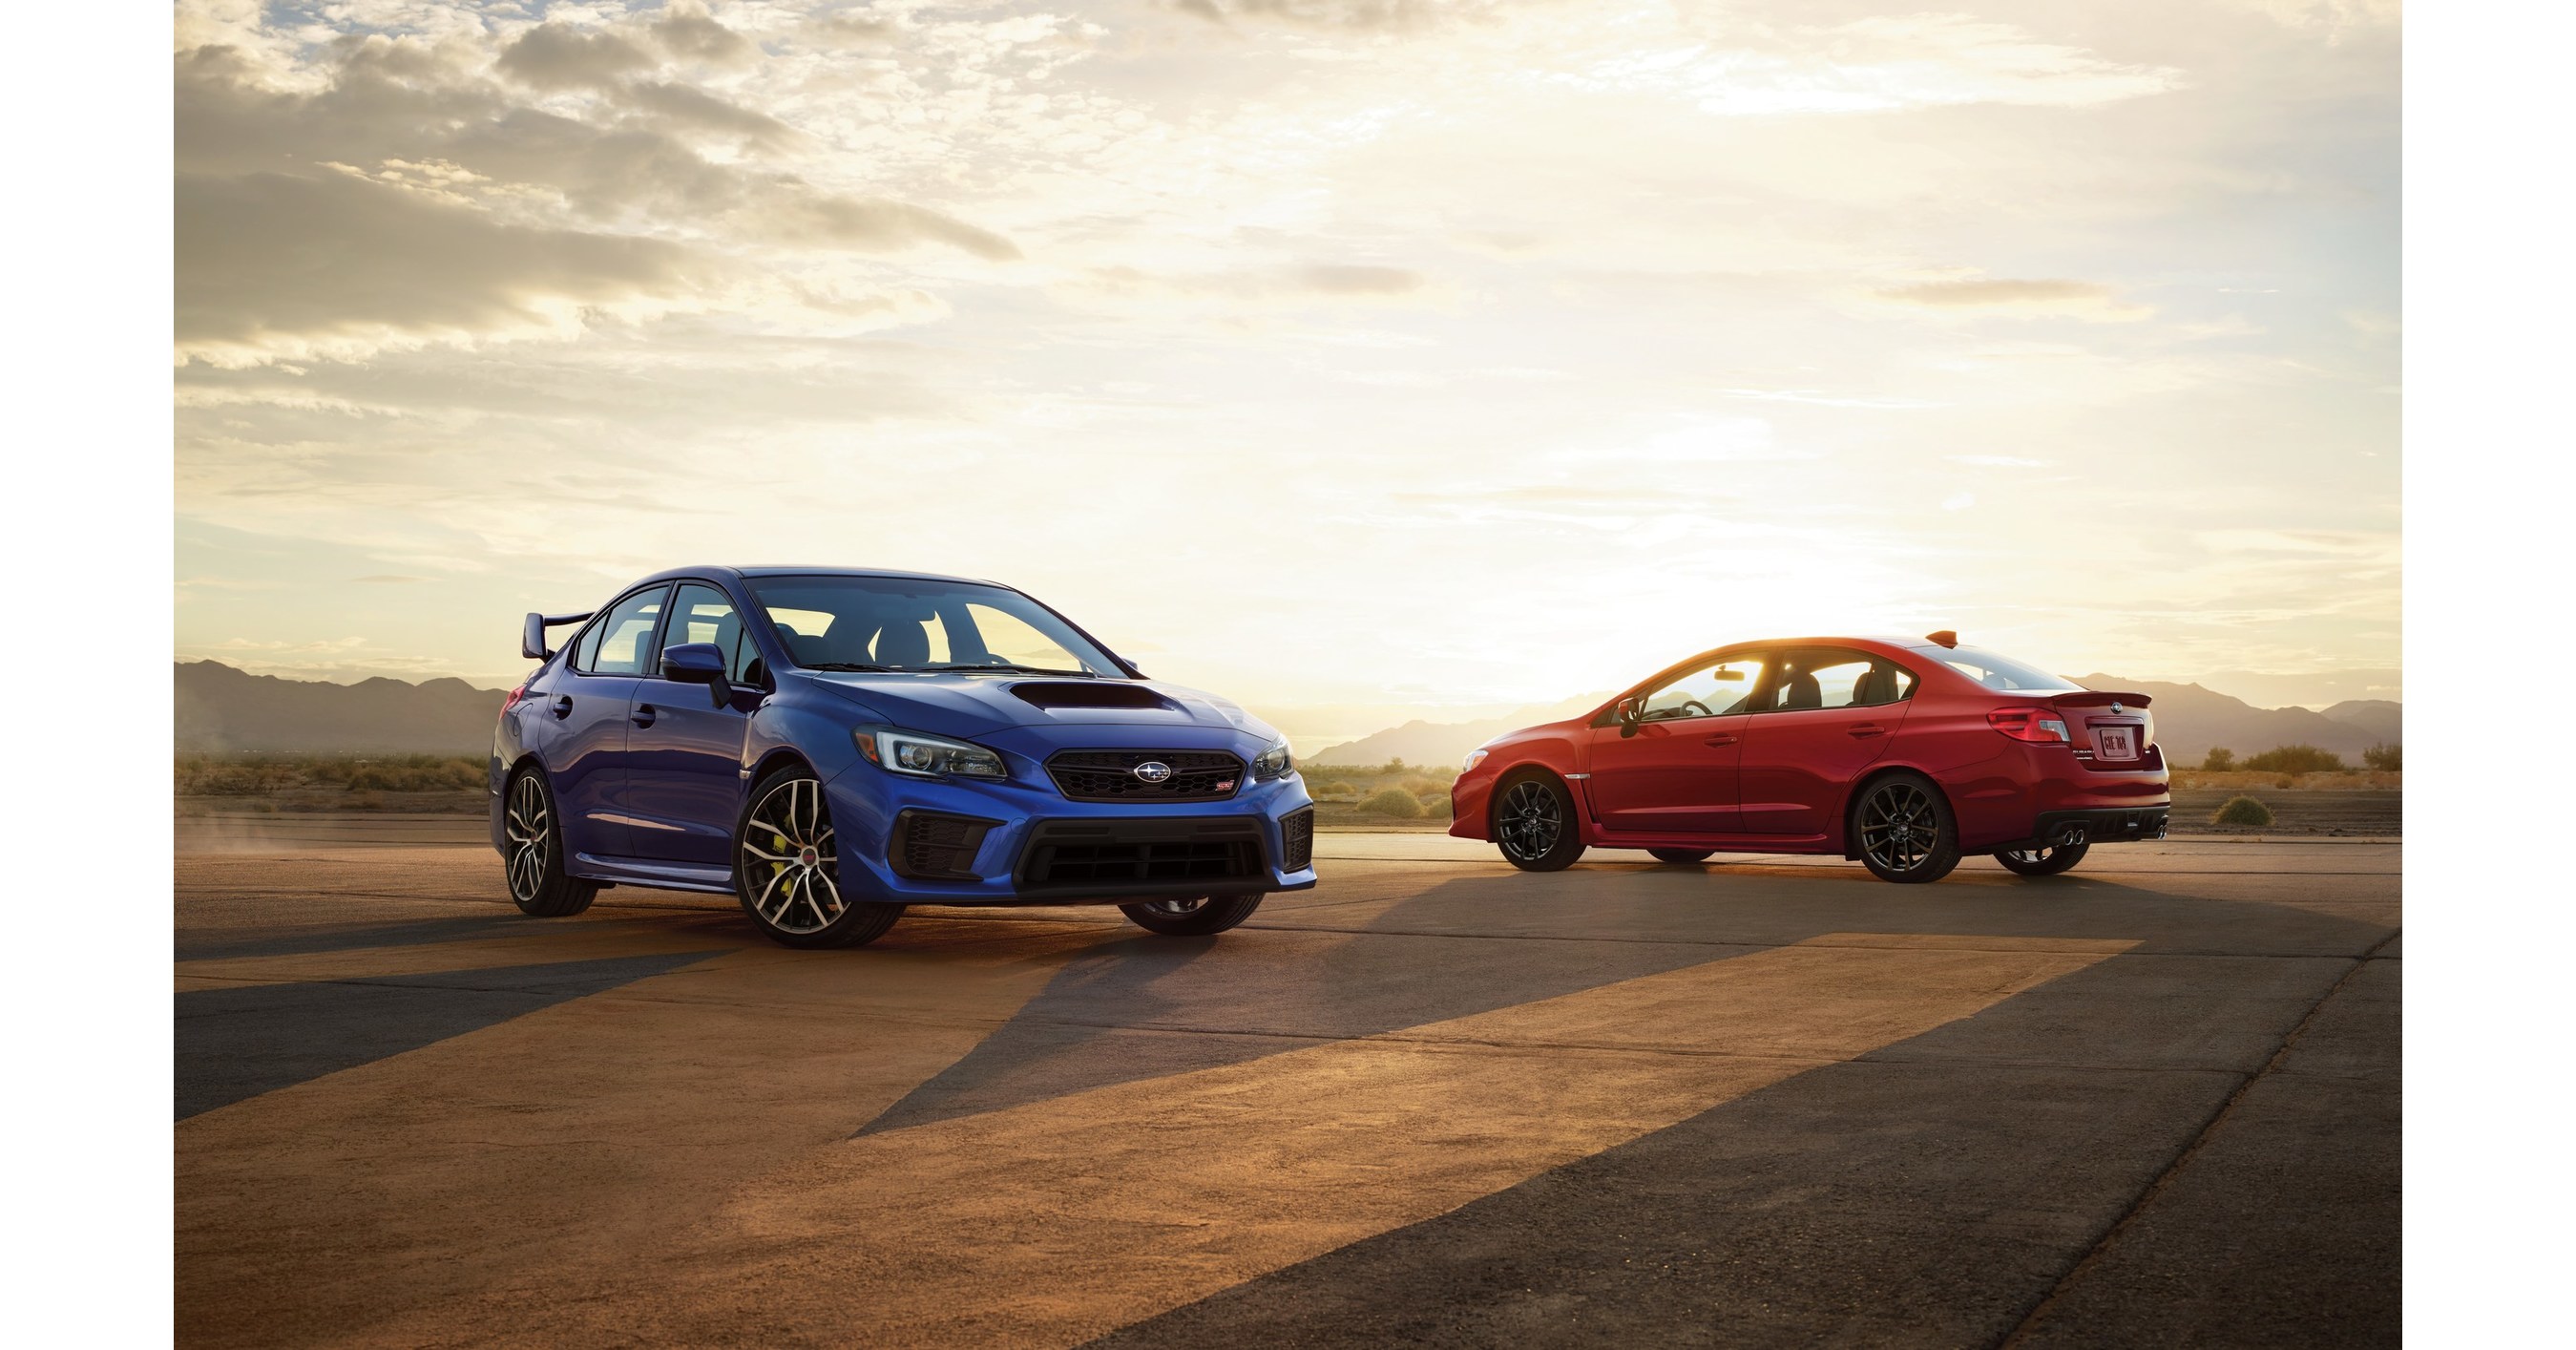 Subaru Announces Pricing for 2021 WRX and WRX STI Performance Cars